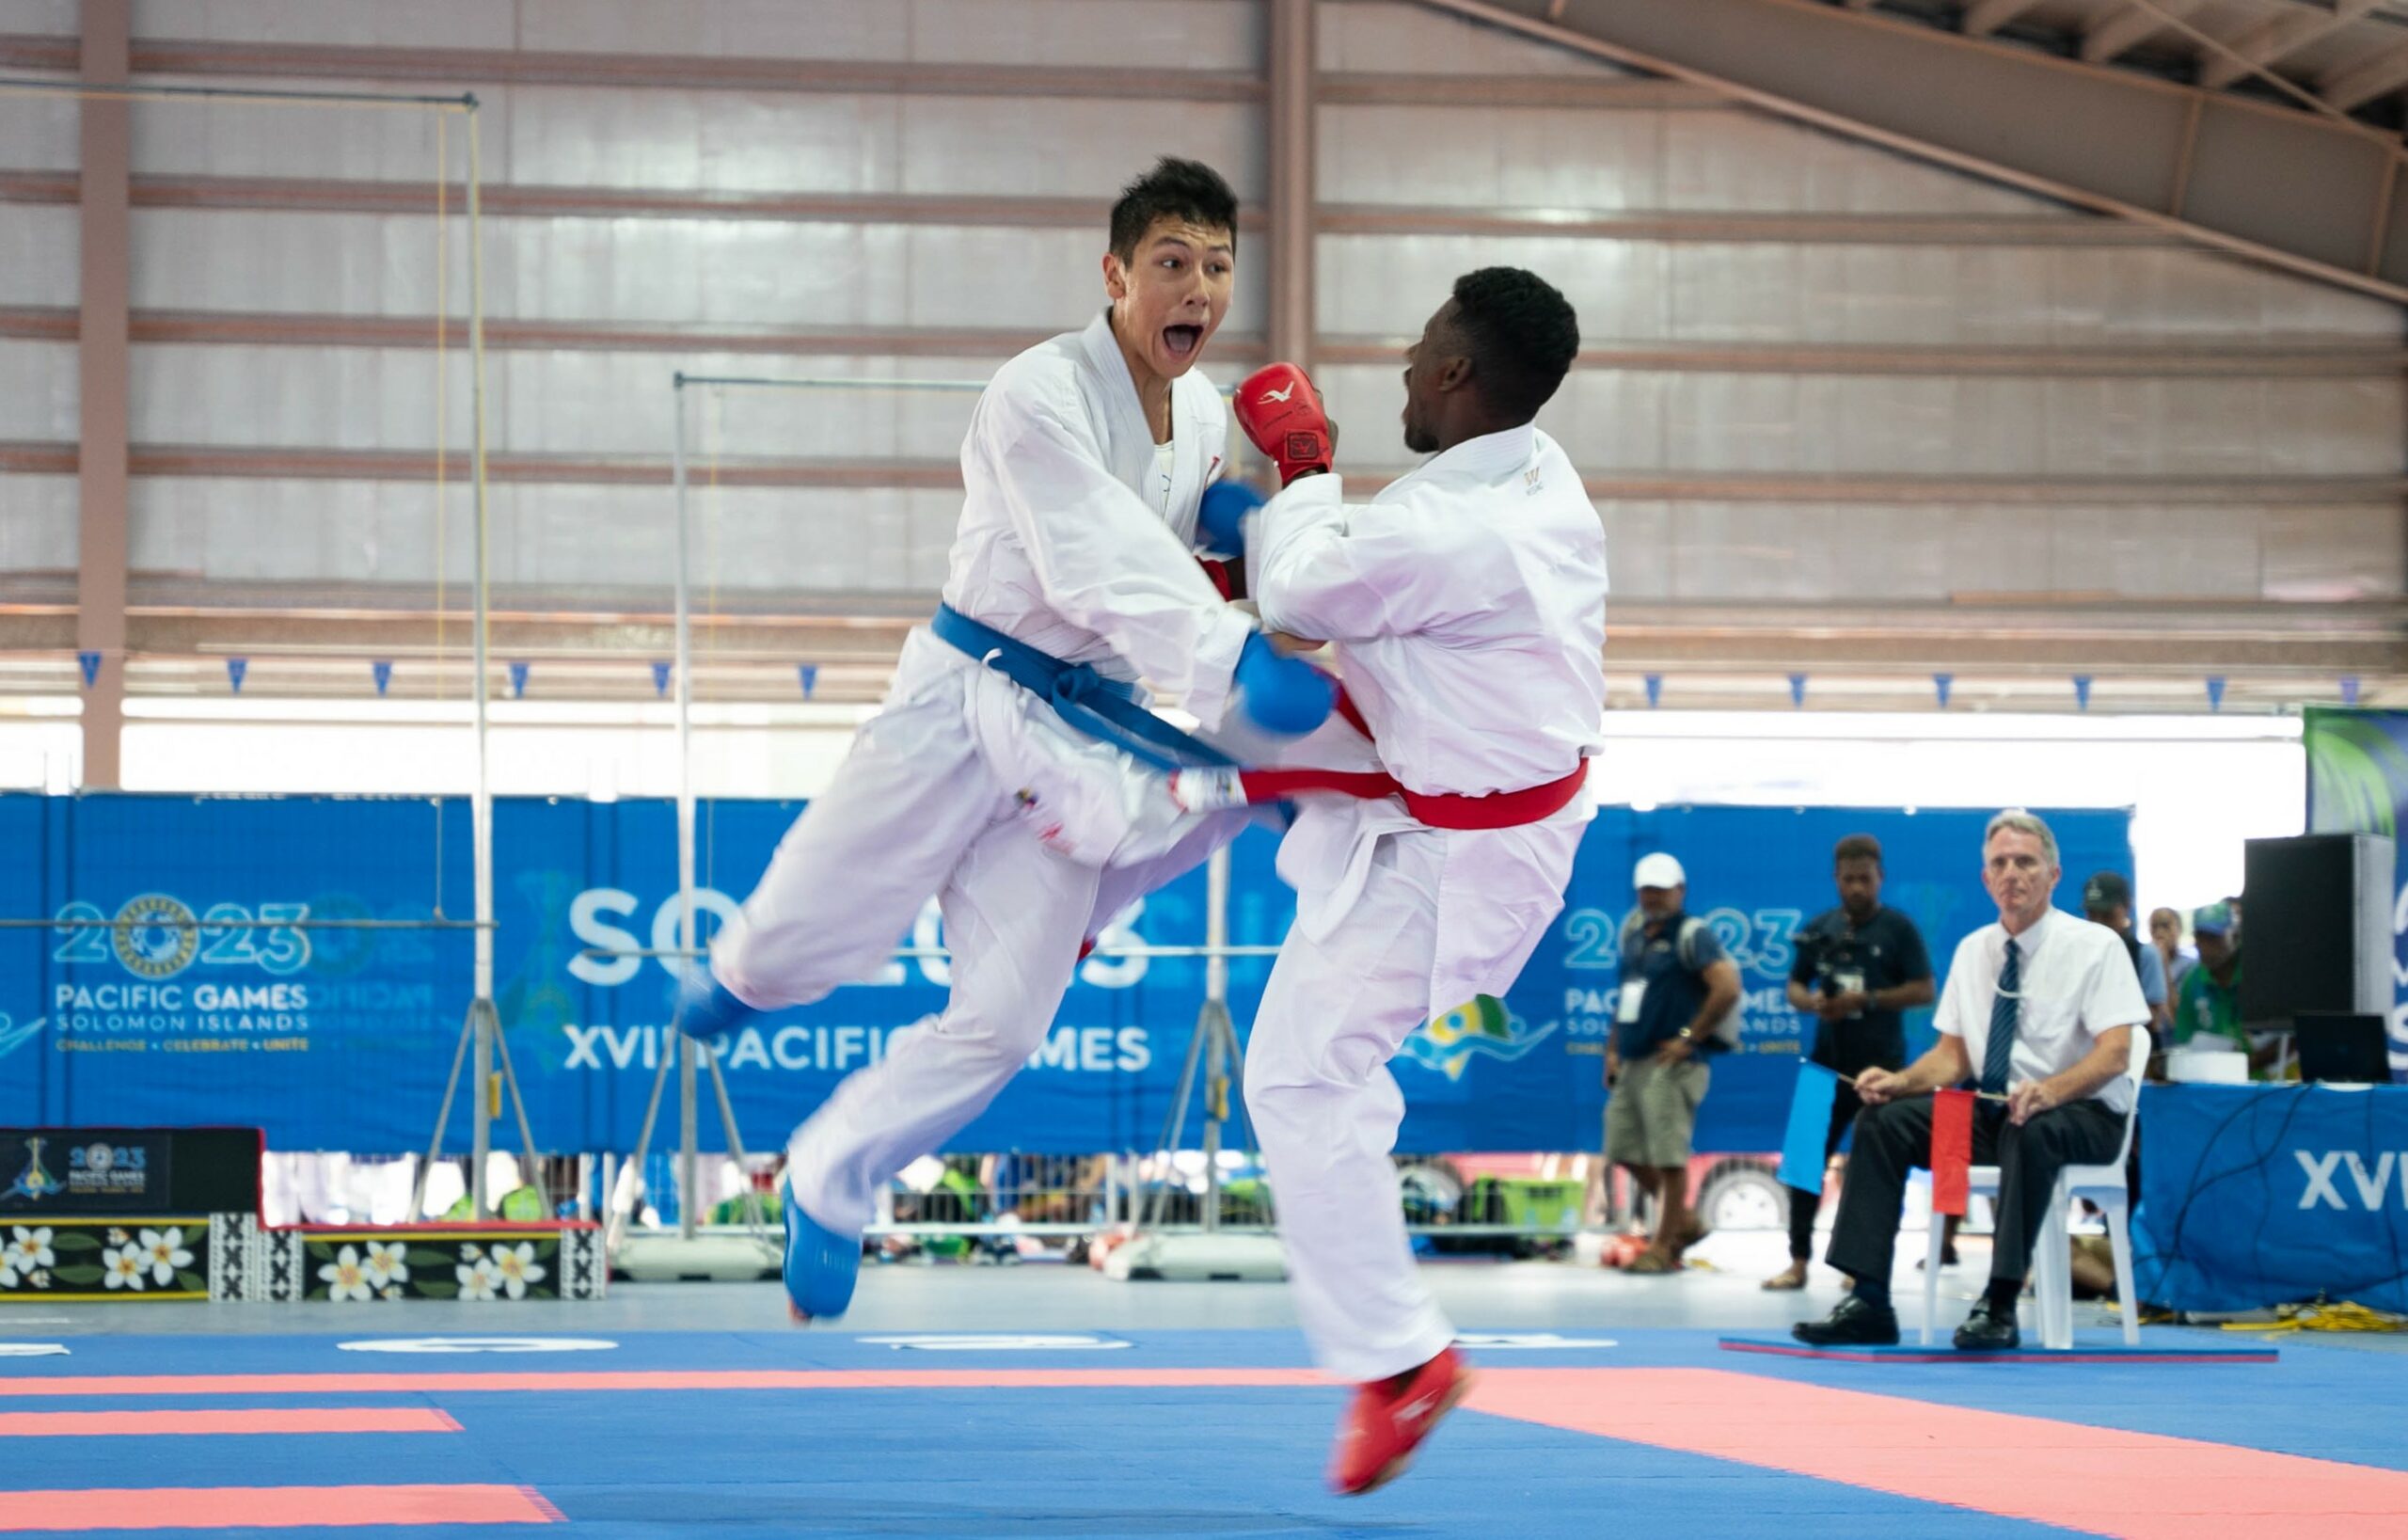 Men competing in karate